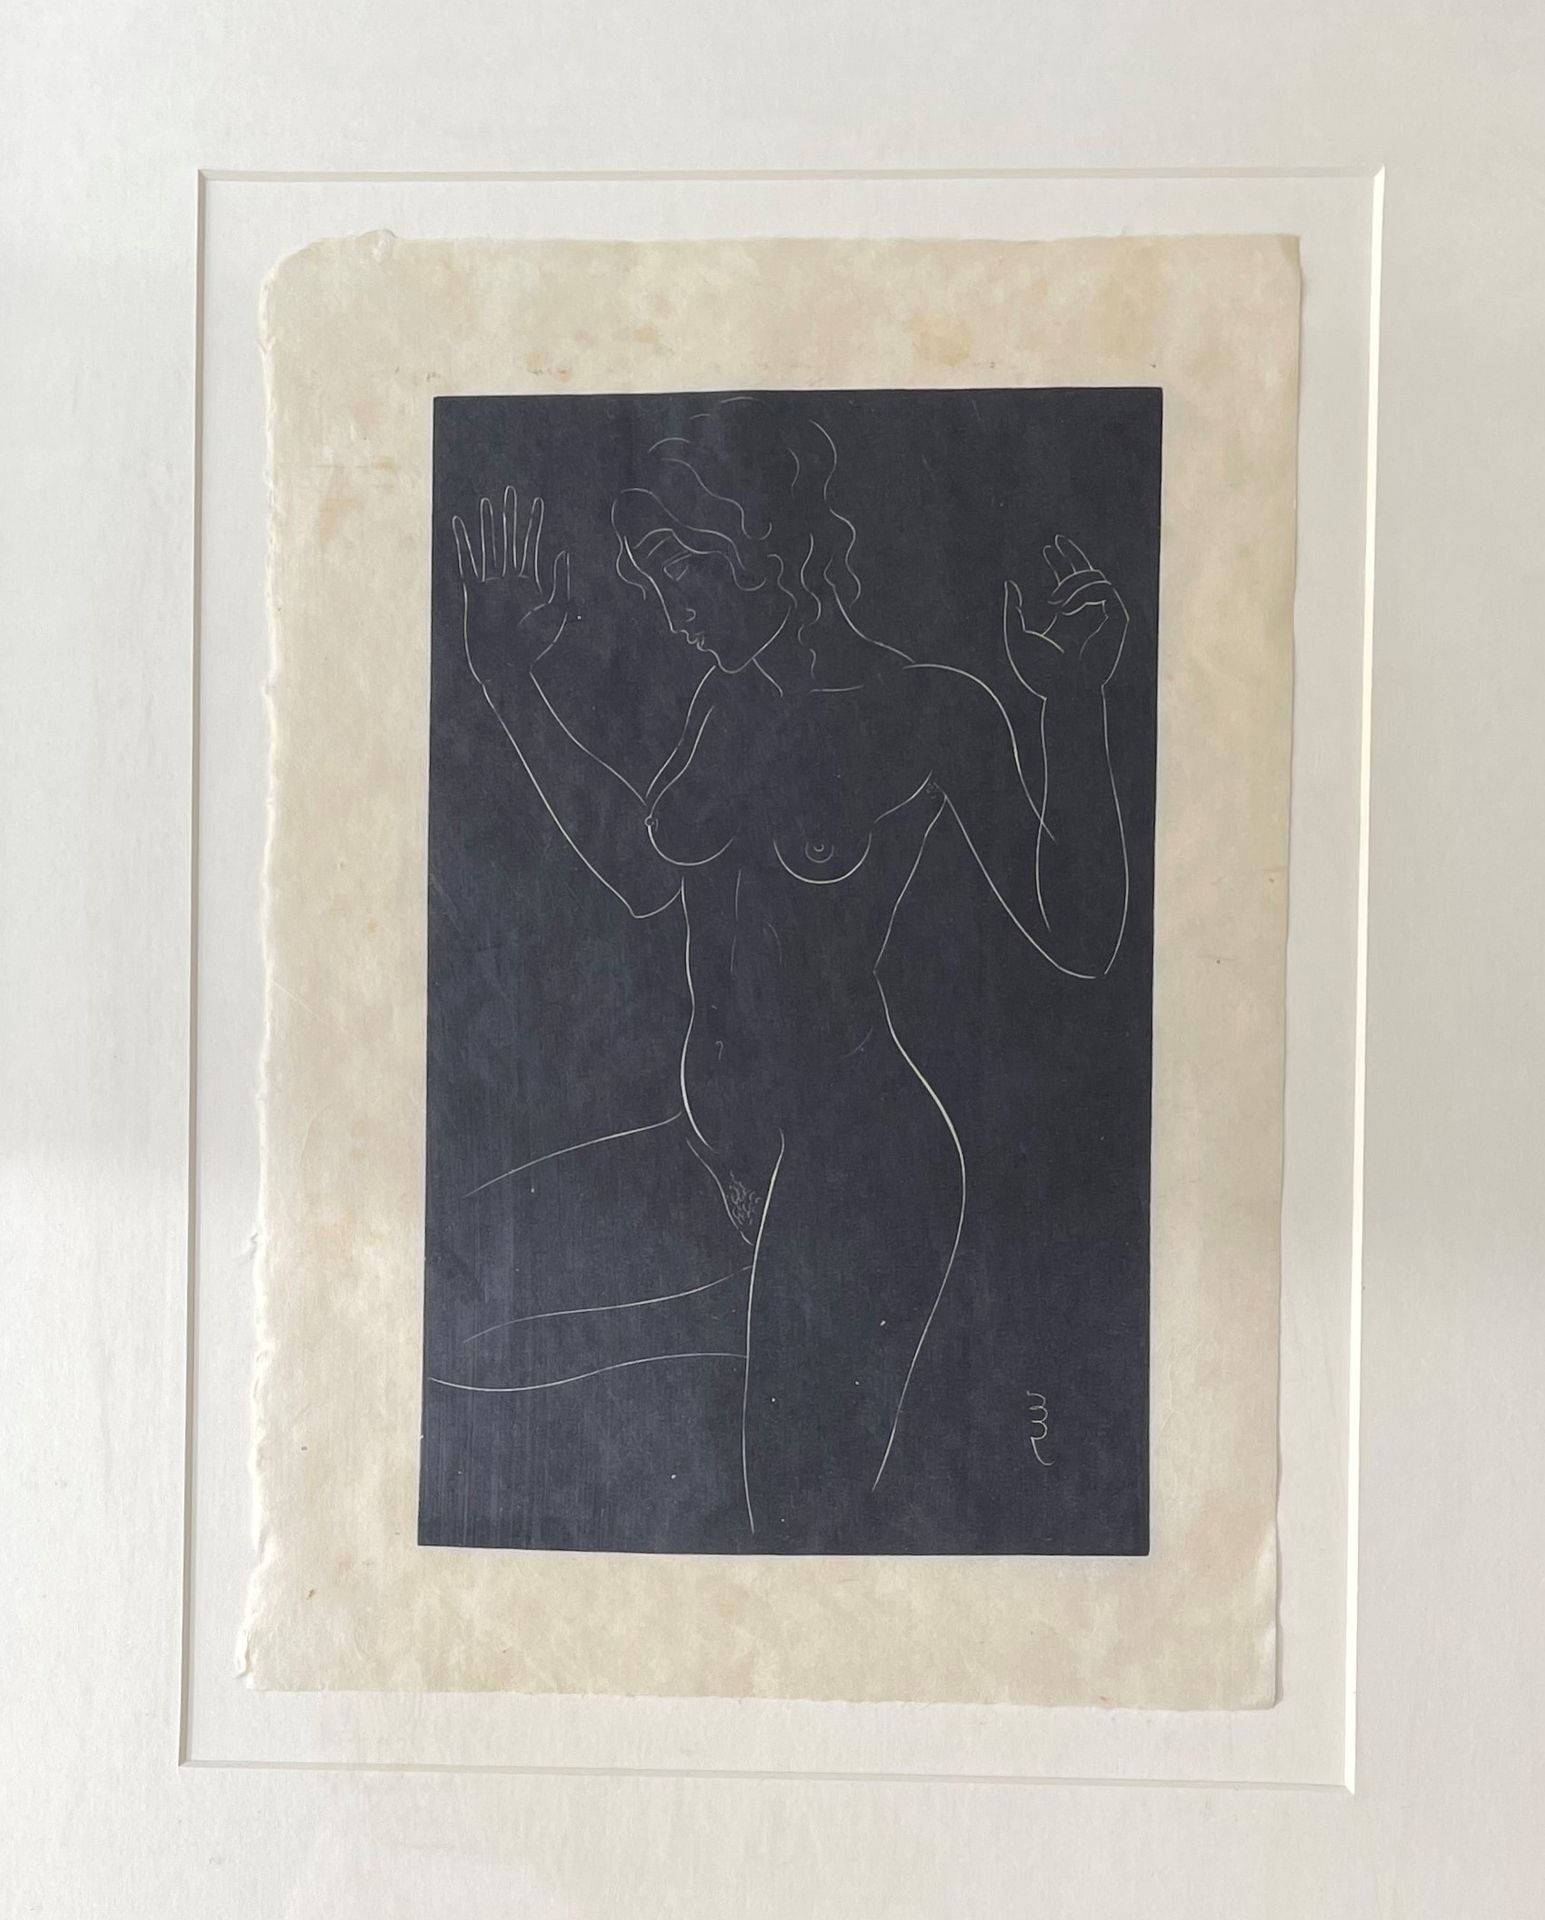 Null 埃里克-吉尔(18826-1940)举起手臂的裸体雕版，版上有字(玻璃下有框)

29x20厘米